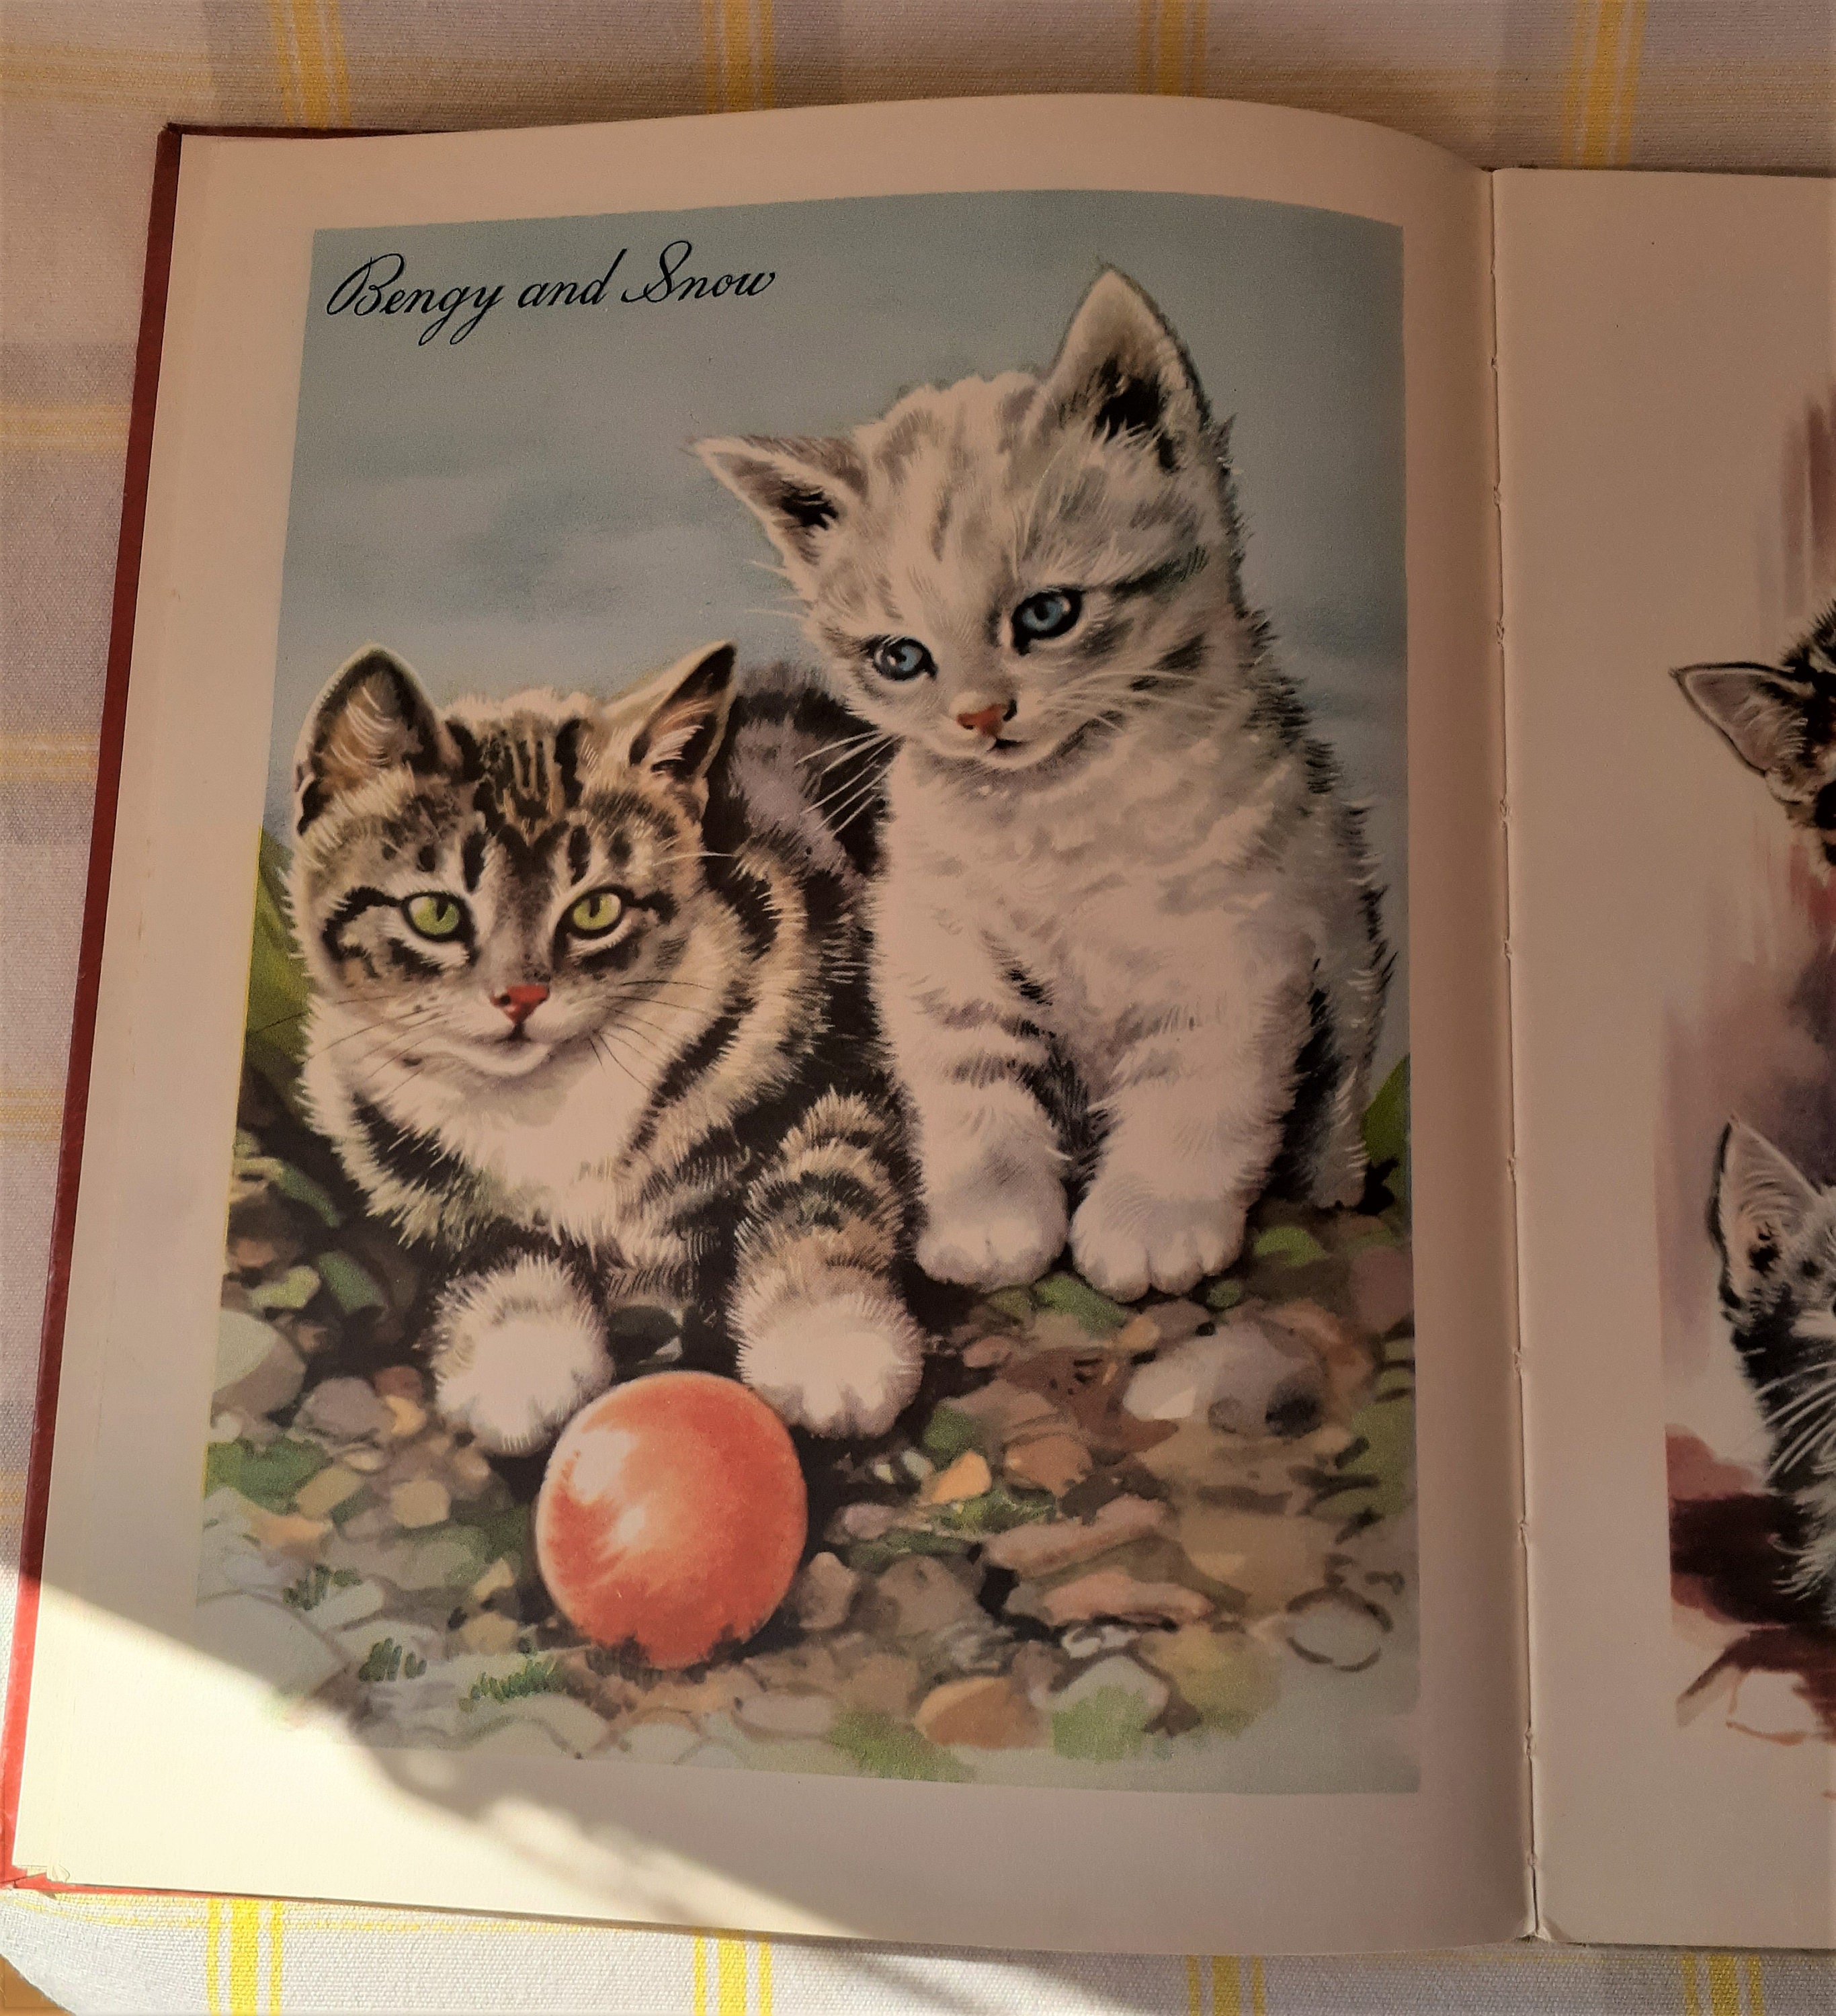 Children's Fiction Cat Books Hardcover Books Award Winning Mixed